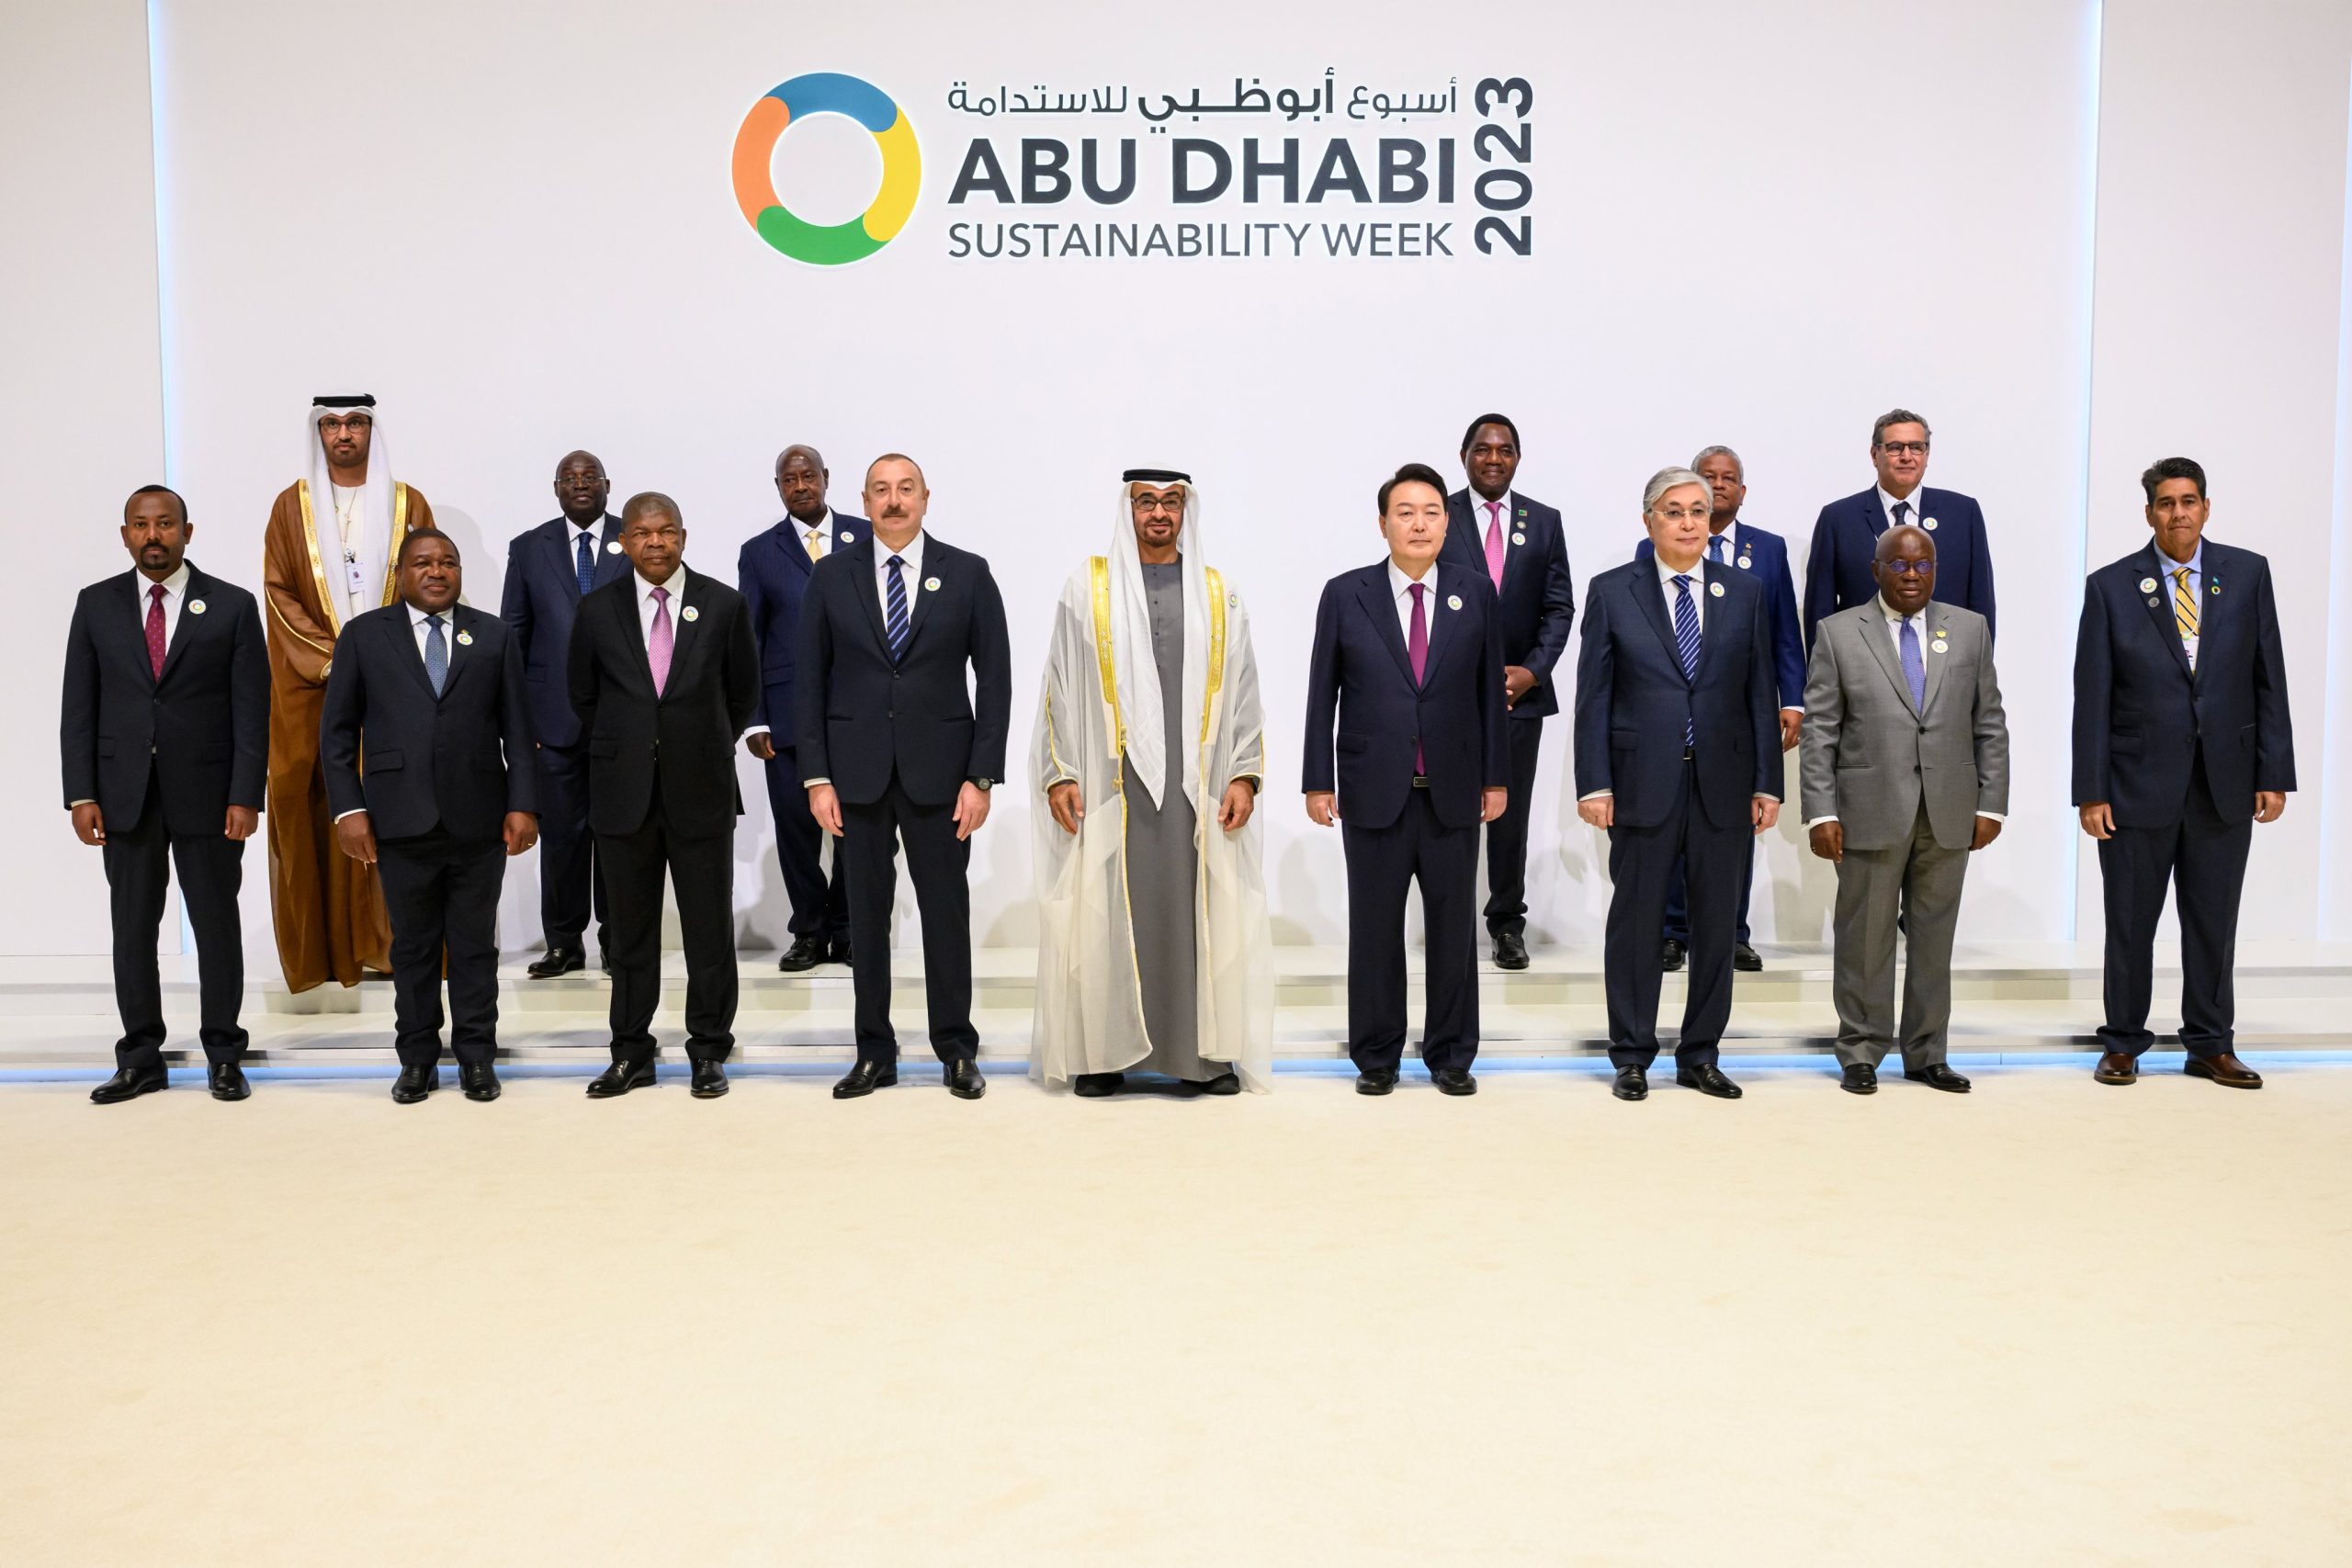 Abu Dhabi Sustainability Week 2023 combines major events focused on